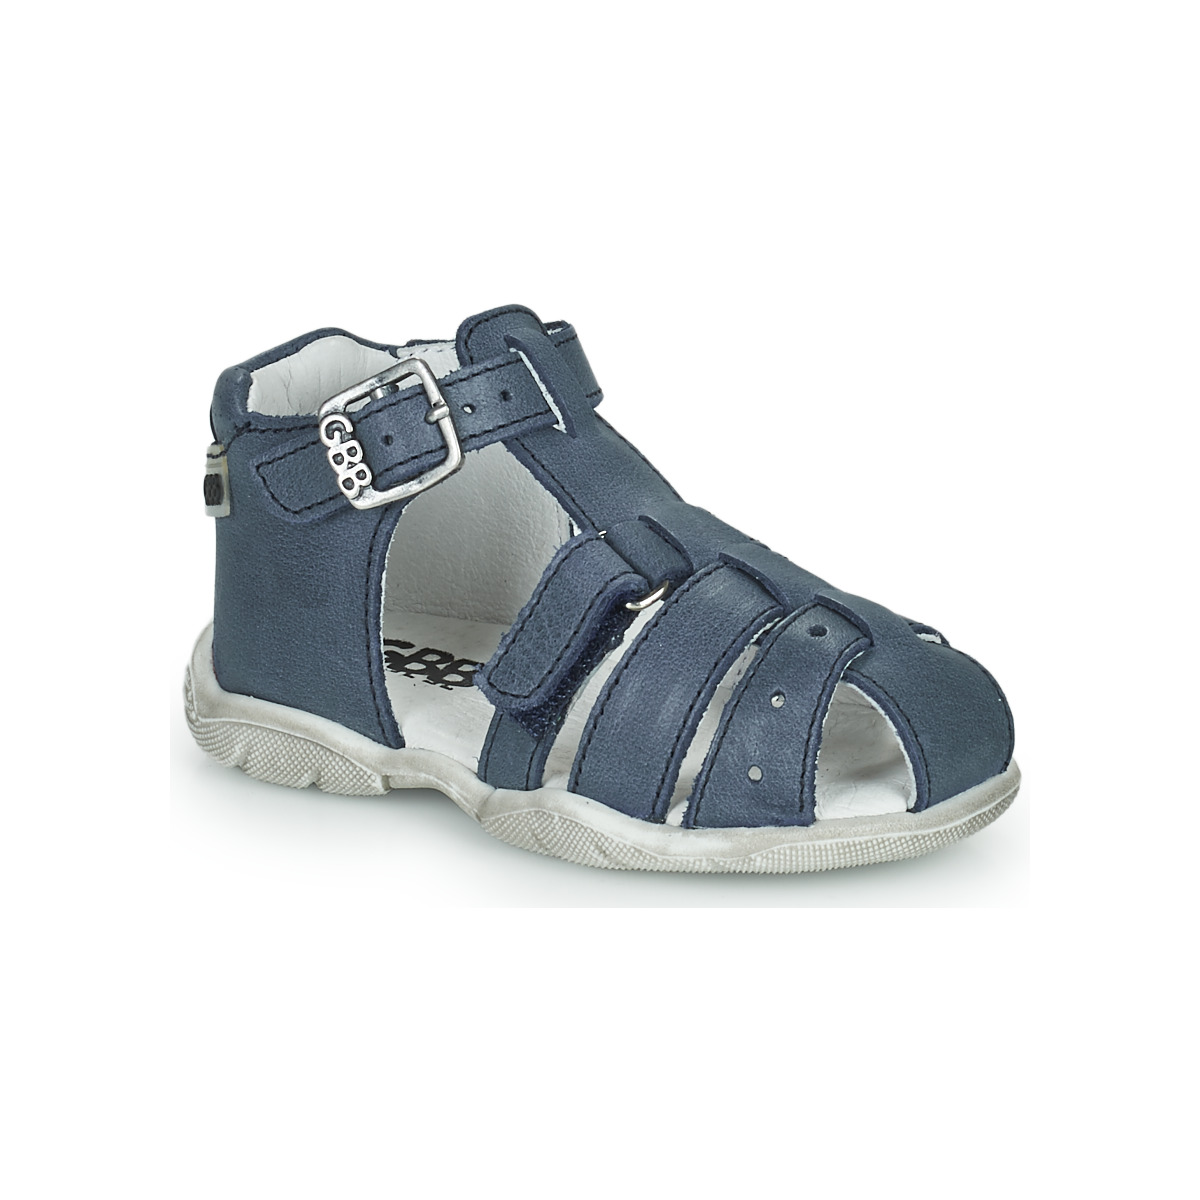 Pantofi Băieți Sandale GBB ARIGO Albastru